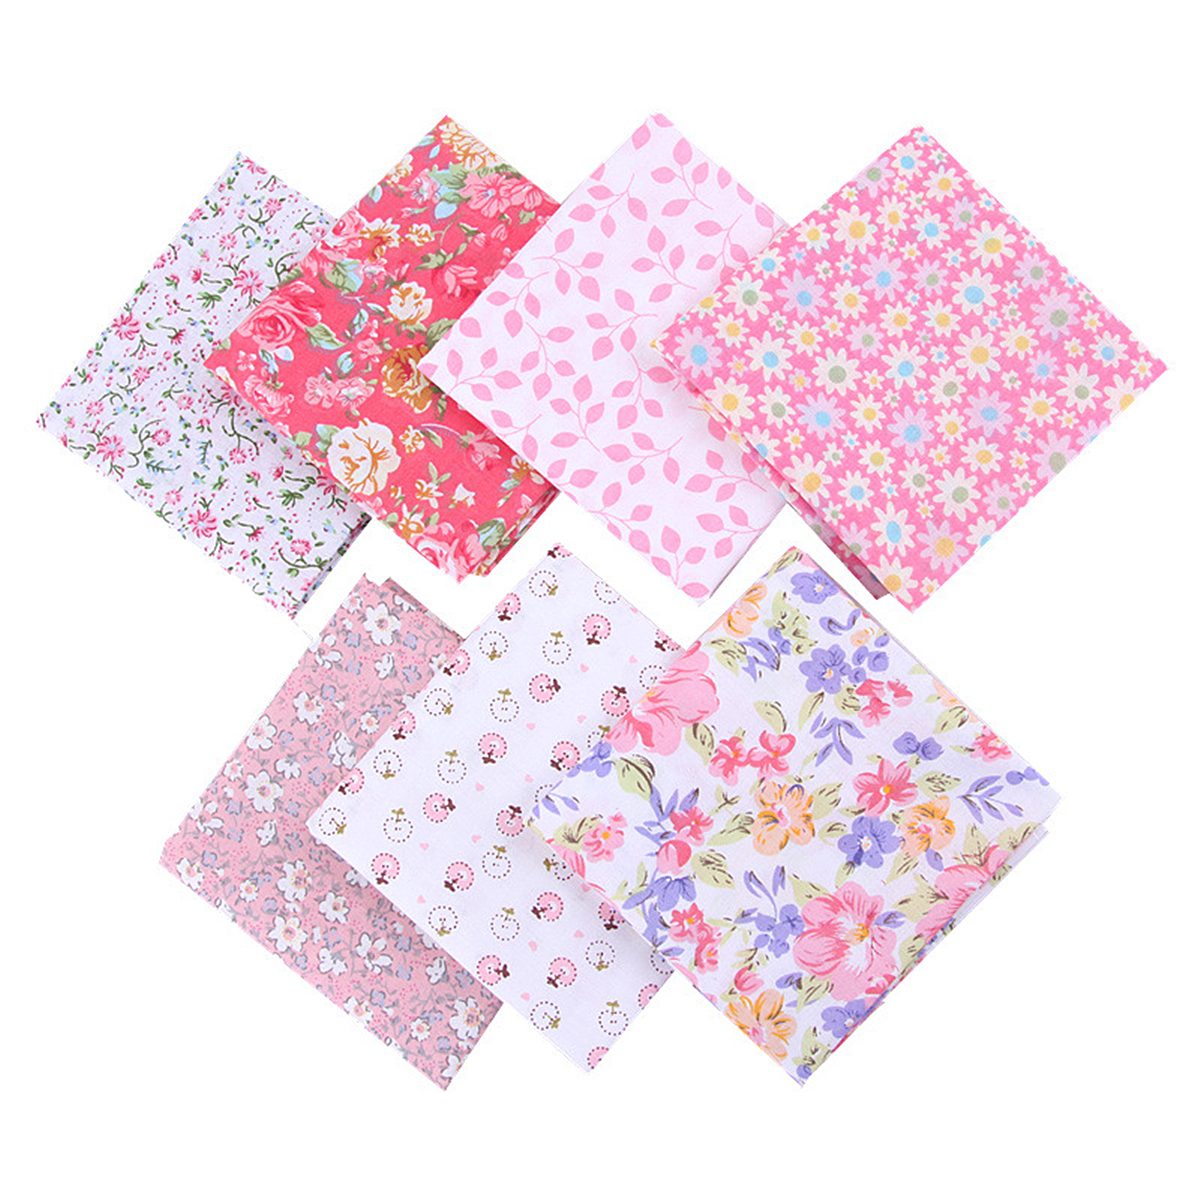 DIY-7PCS-Quilting-Bundle-Patchwork-Cotton-Fabric-Handmade-Sewing-Crafts-Floral-1691620-4